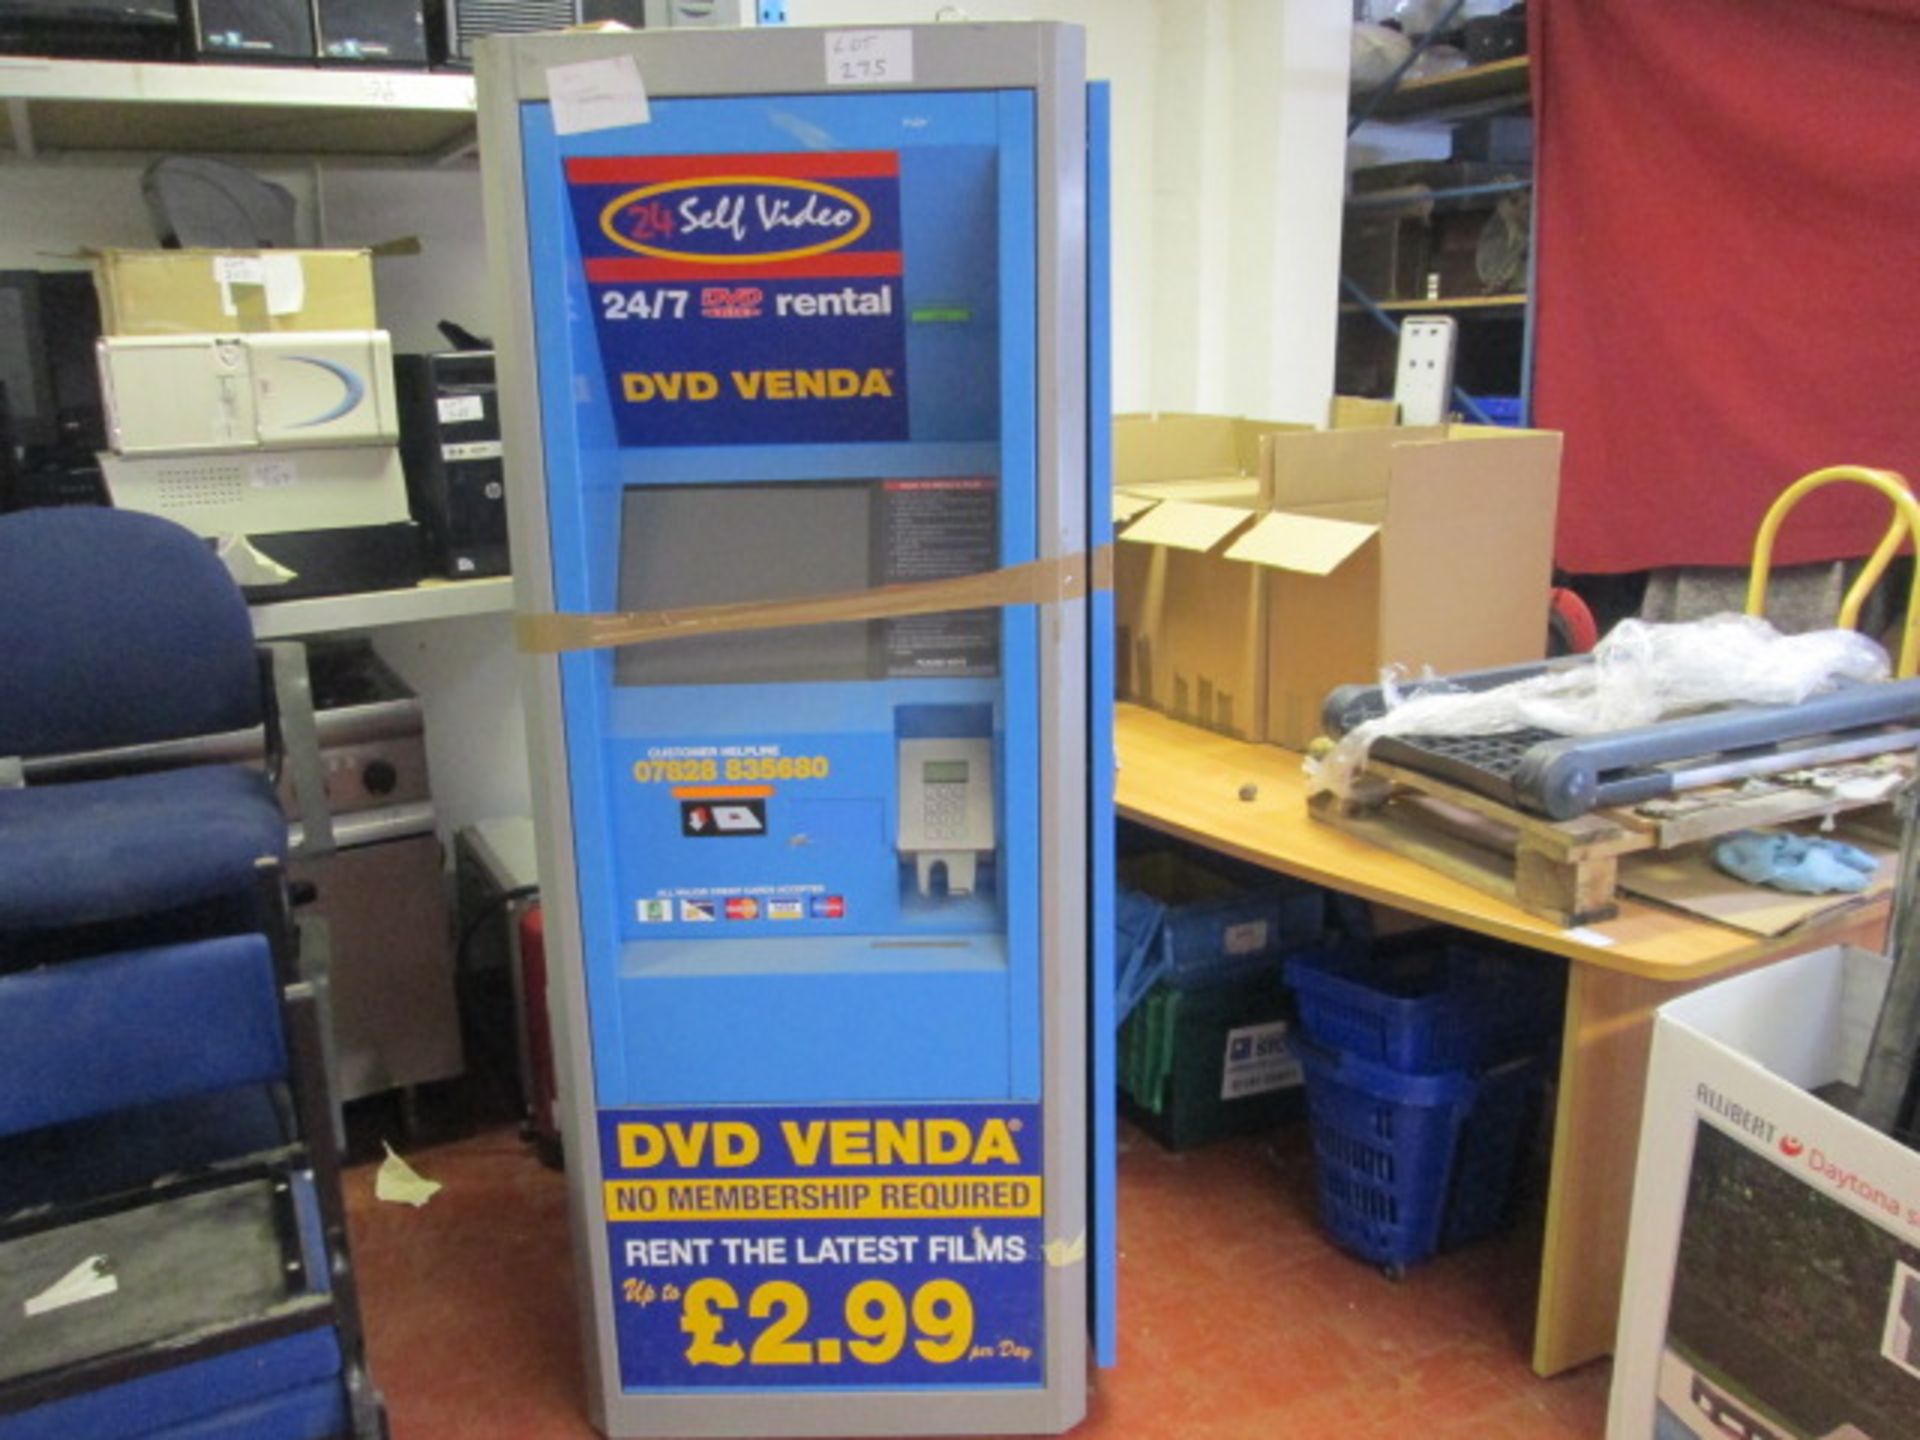 24/7 DVD Video Rental Vending Machine.